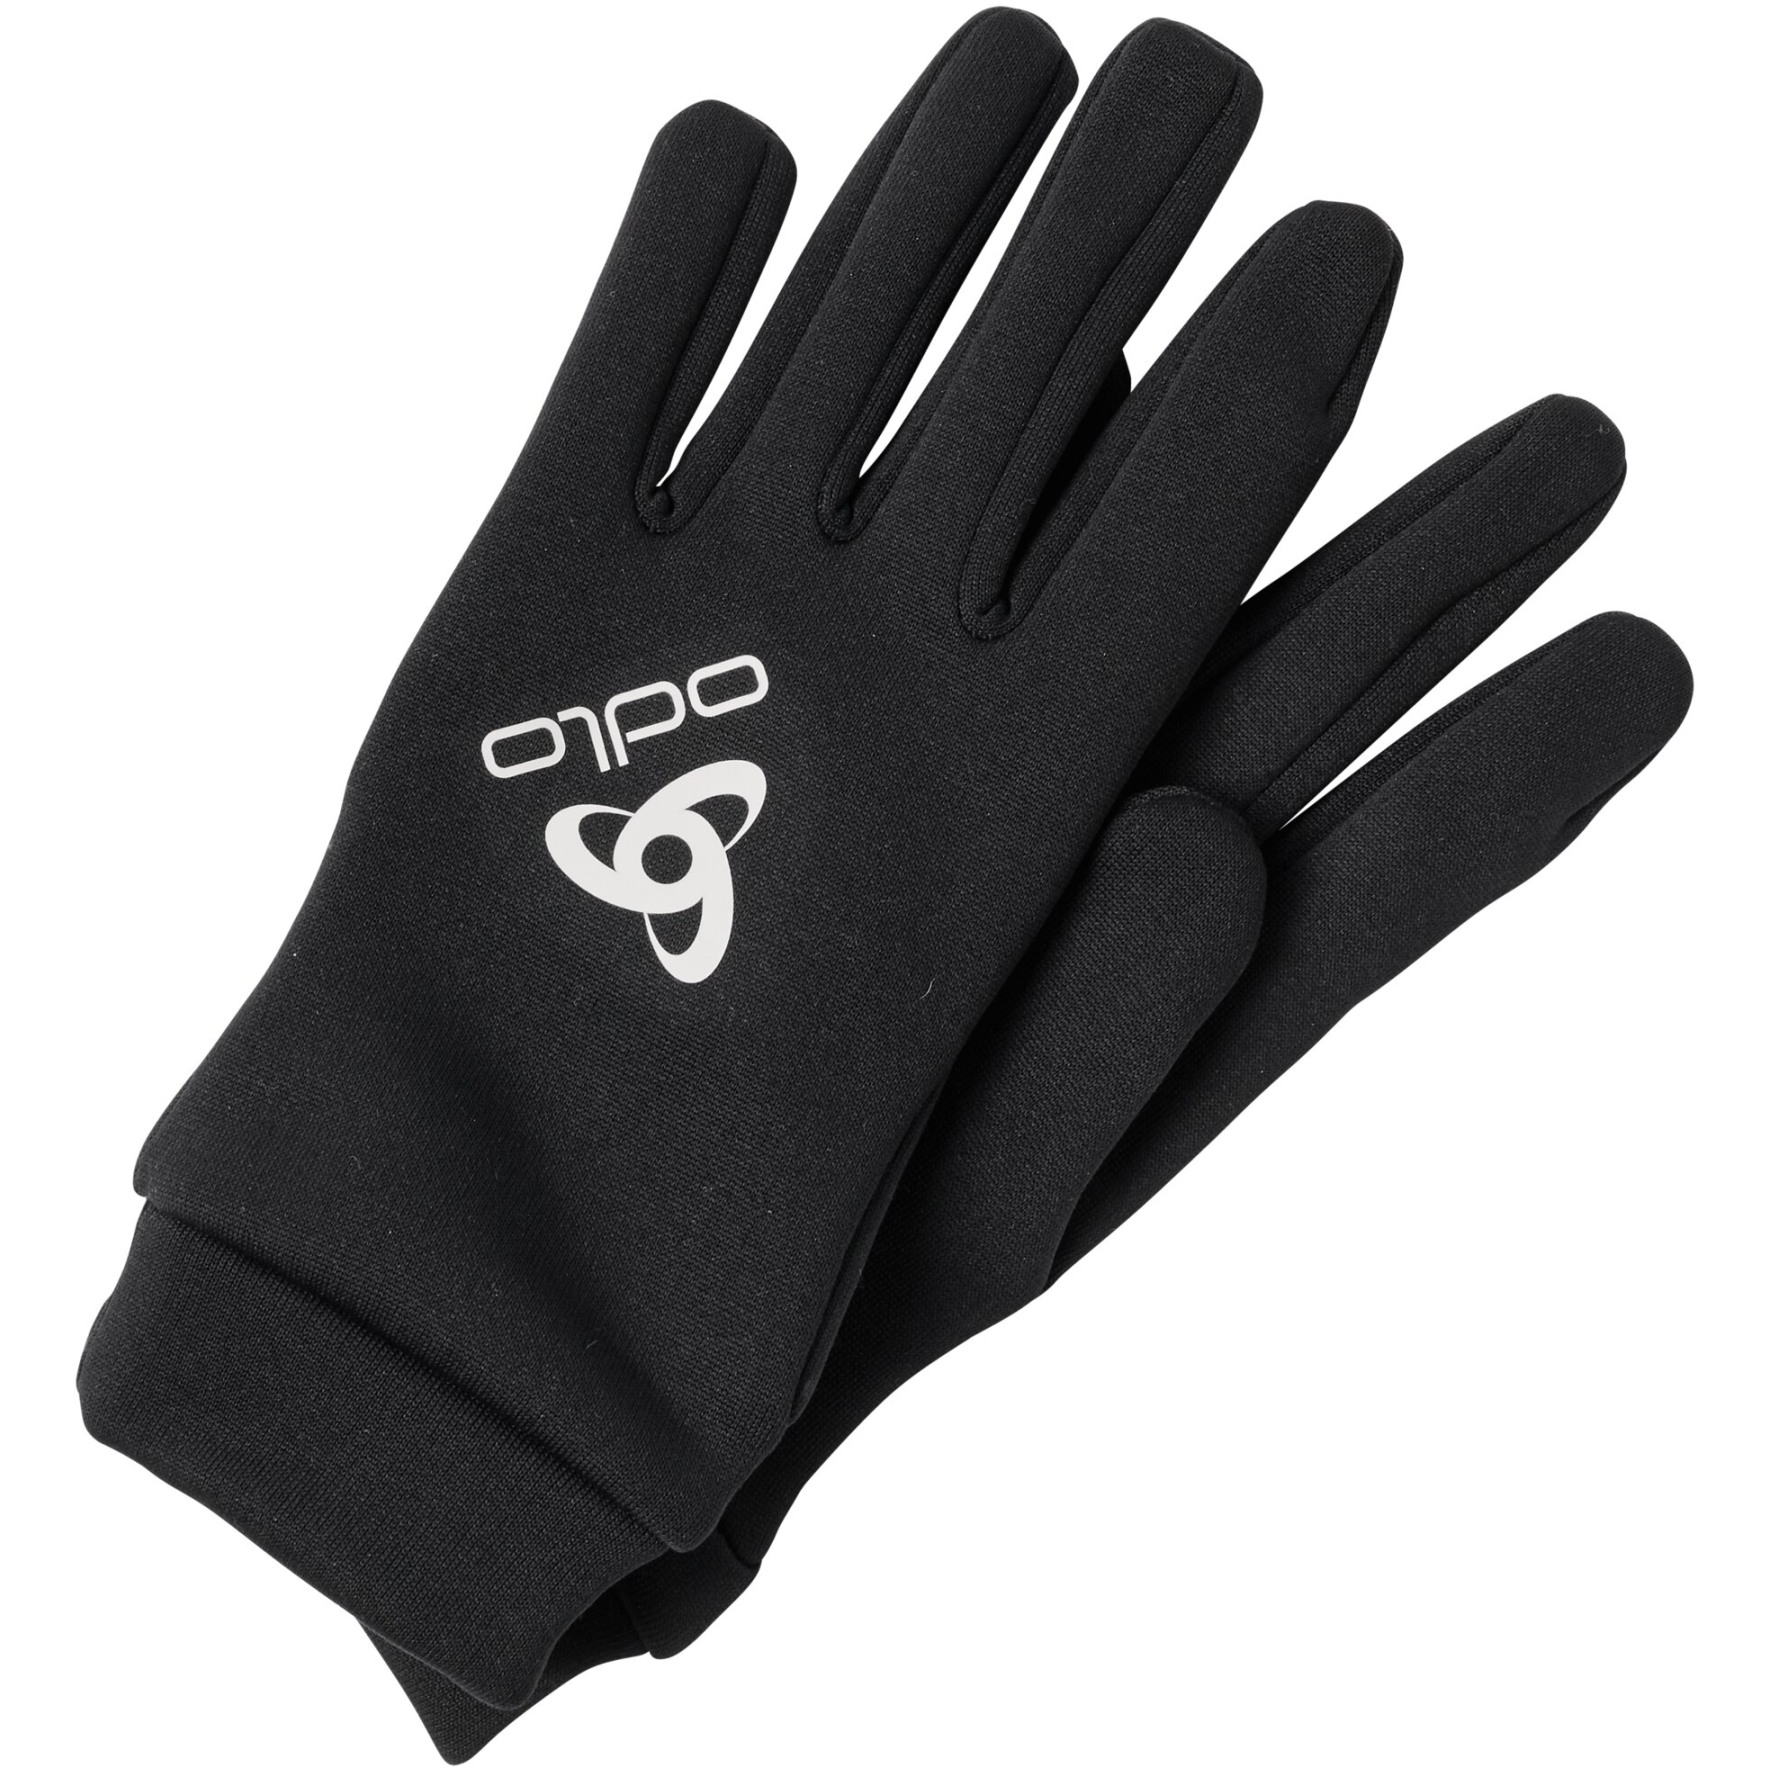 Produktbild von Odlo Stretchfleece Liner Eco Handschuhe - schwarz